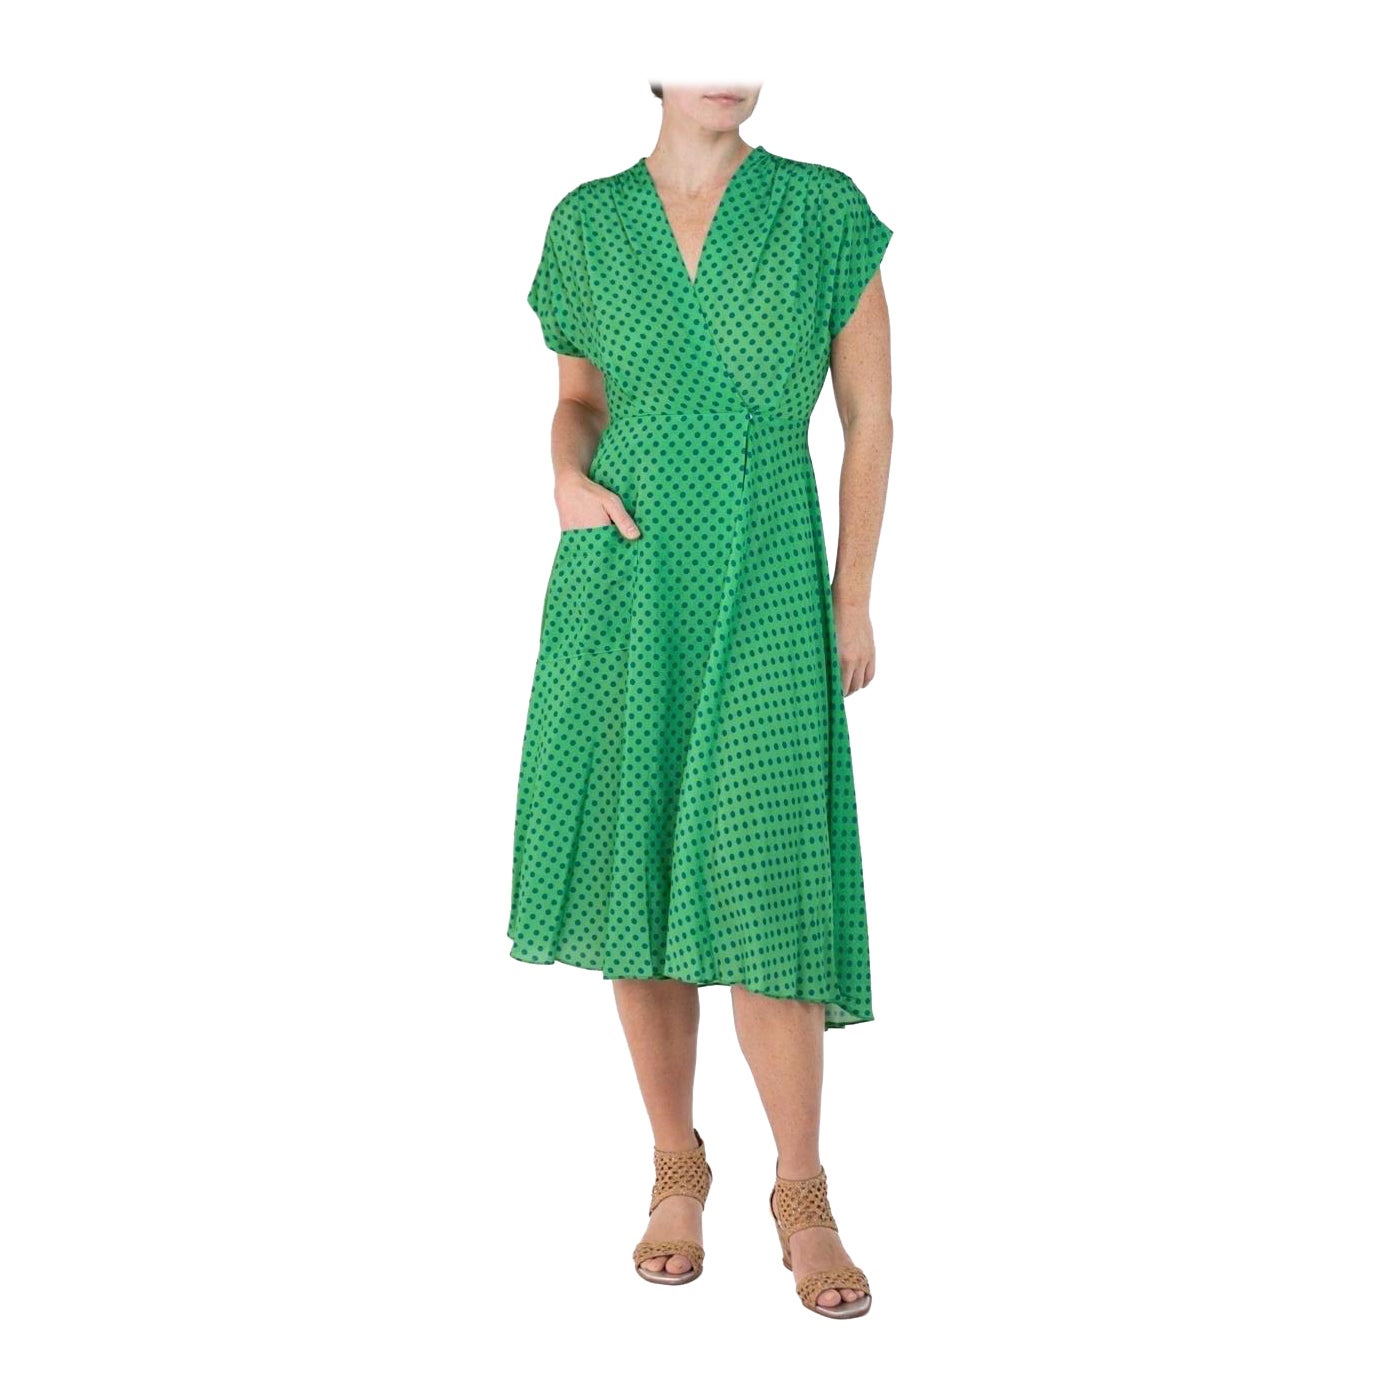 Morphew Collection Green & Blue Polka Dot Novelty Print Cold Rayon Bias Dress M For Sale